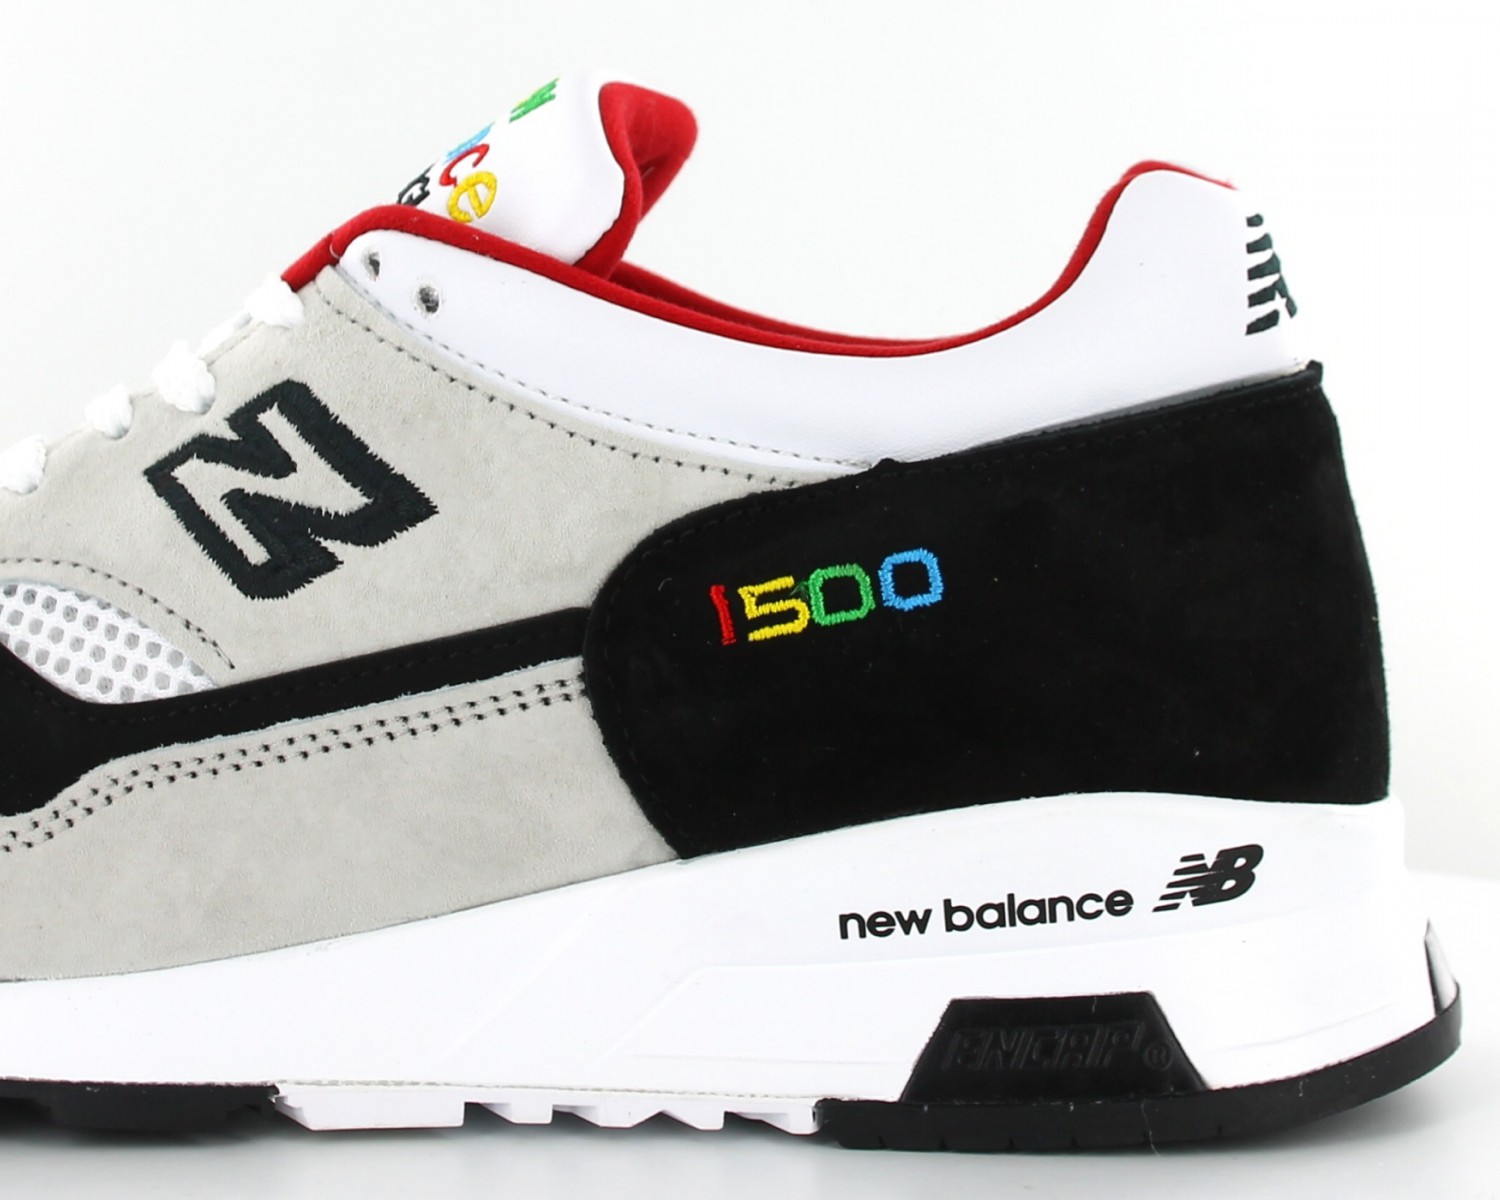 New Balance 1500 colorprisma pack White-grey-black-rainbow M1500PWK